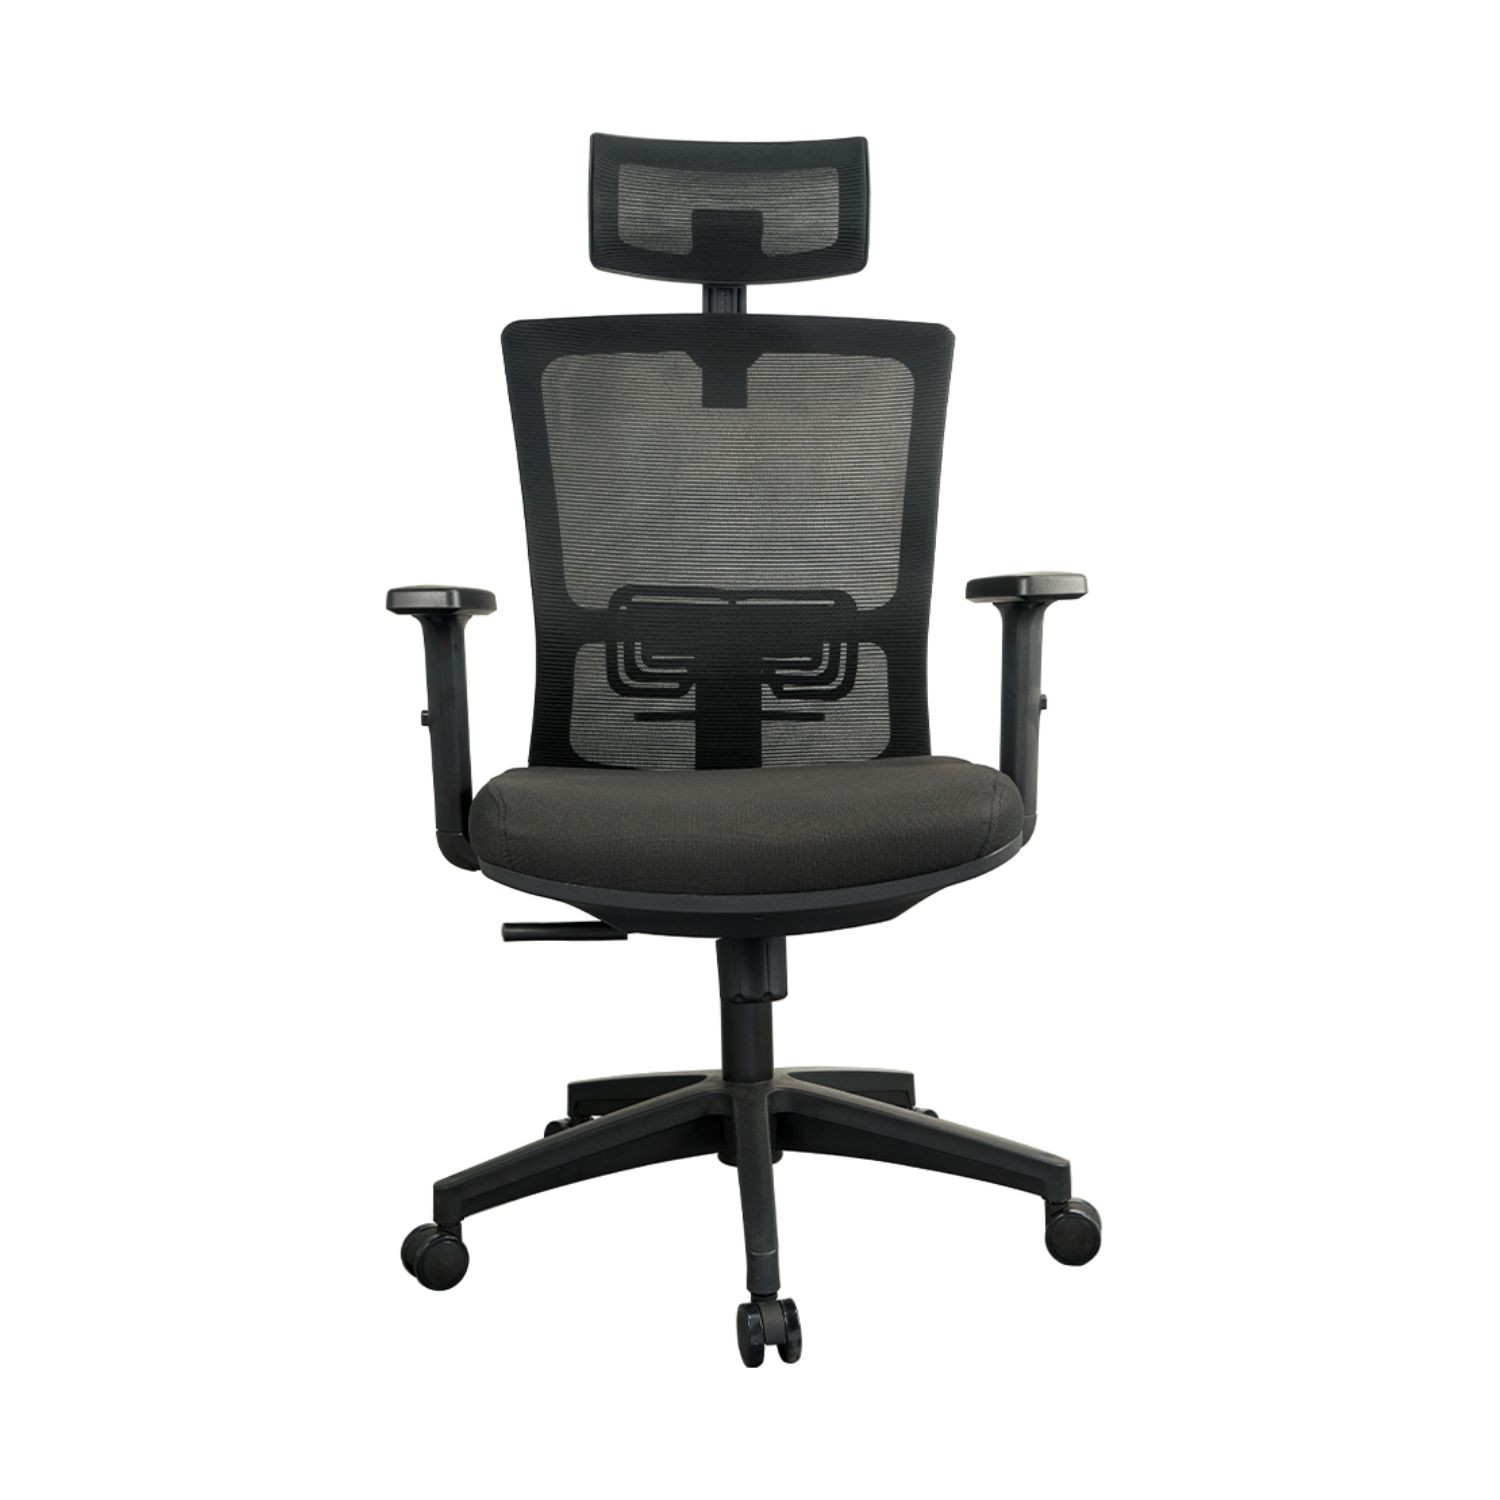 Ekkio Office Chair S-Shaped Backrest, Adjustable Height, Durable Frame Black